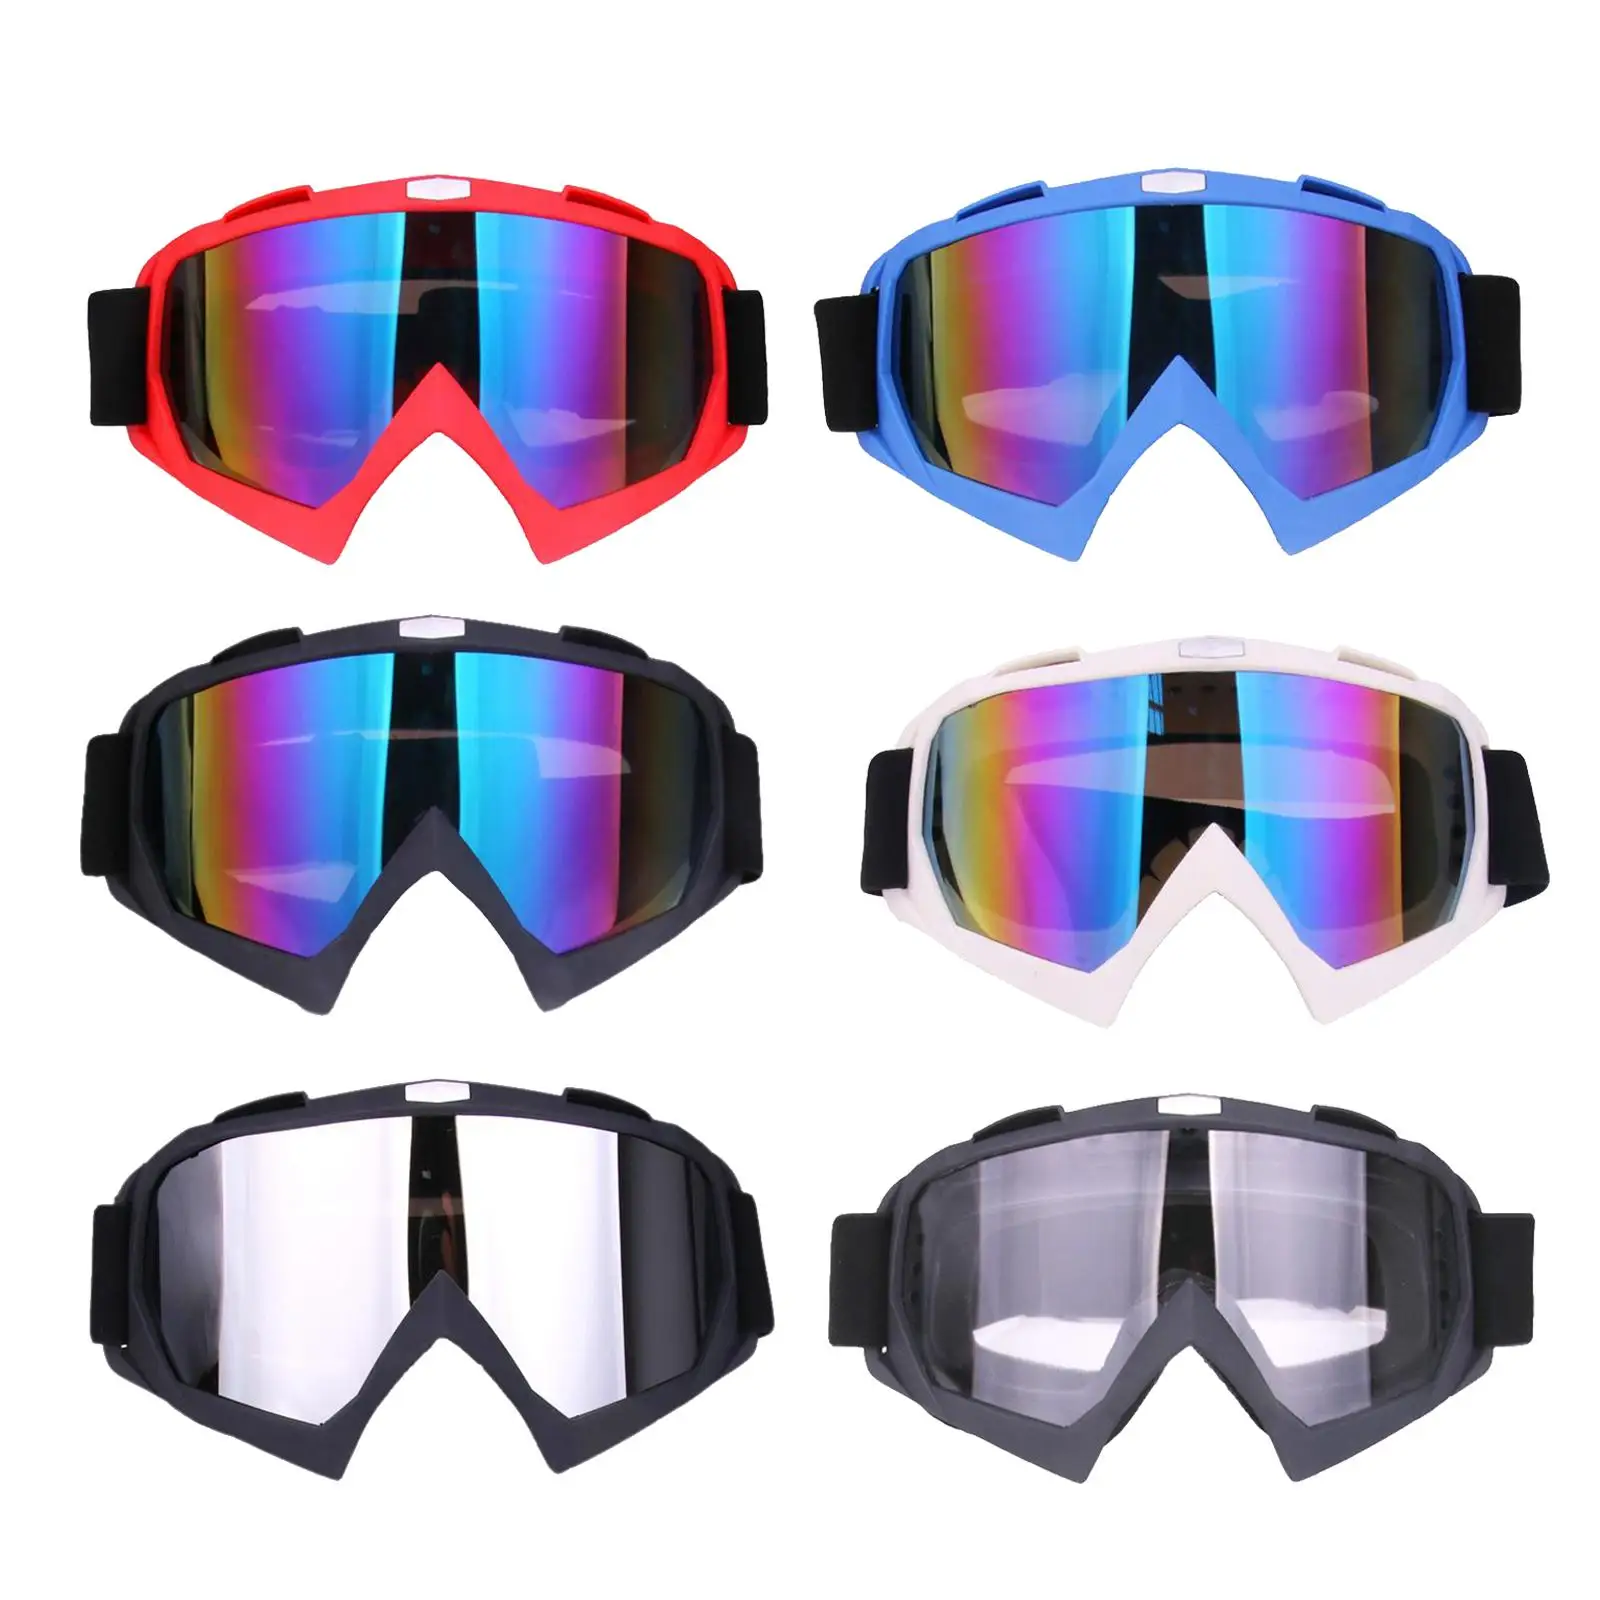  Ski Safety Glasses Goggles WindMotorcycle Eyewear with Adjustable Elastic Strap